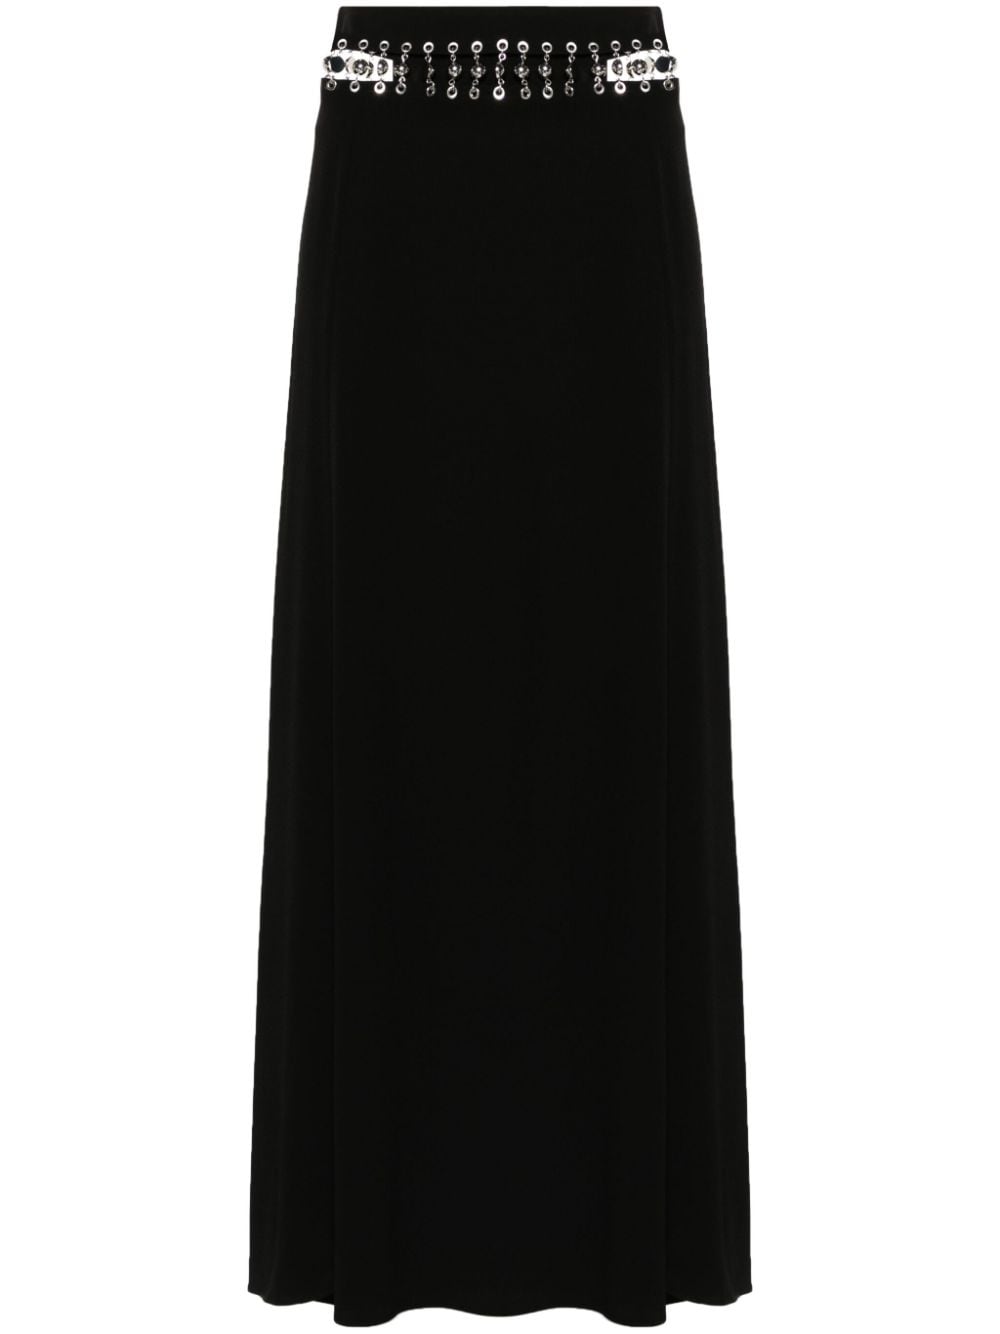 Image 1 of Rabanne high-waist maxi skirt